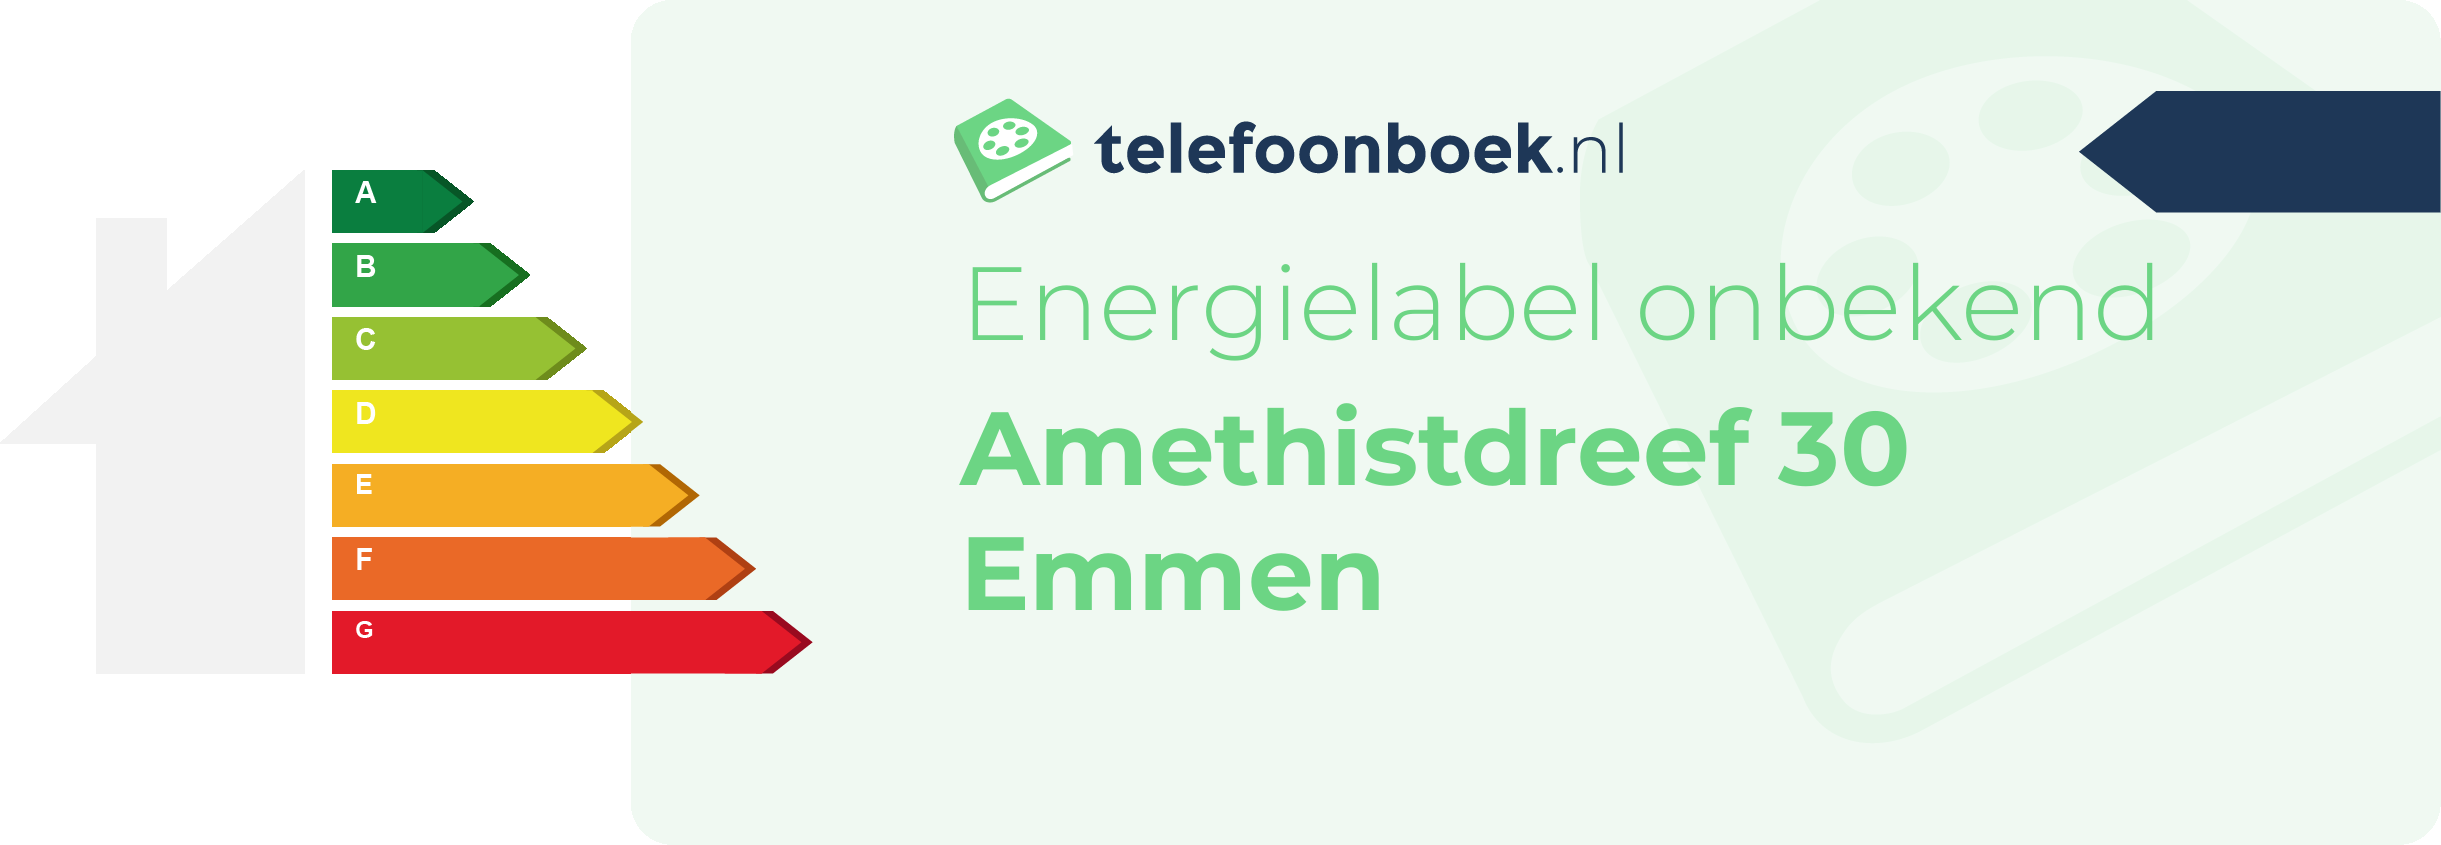 Energielabel Amethistdreef 30 Emmen